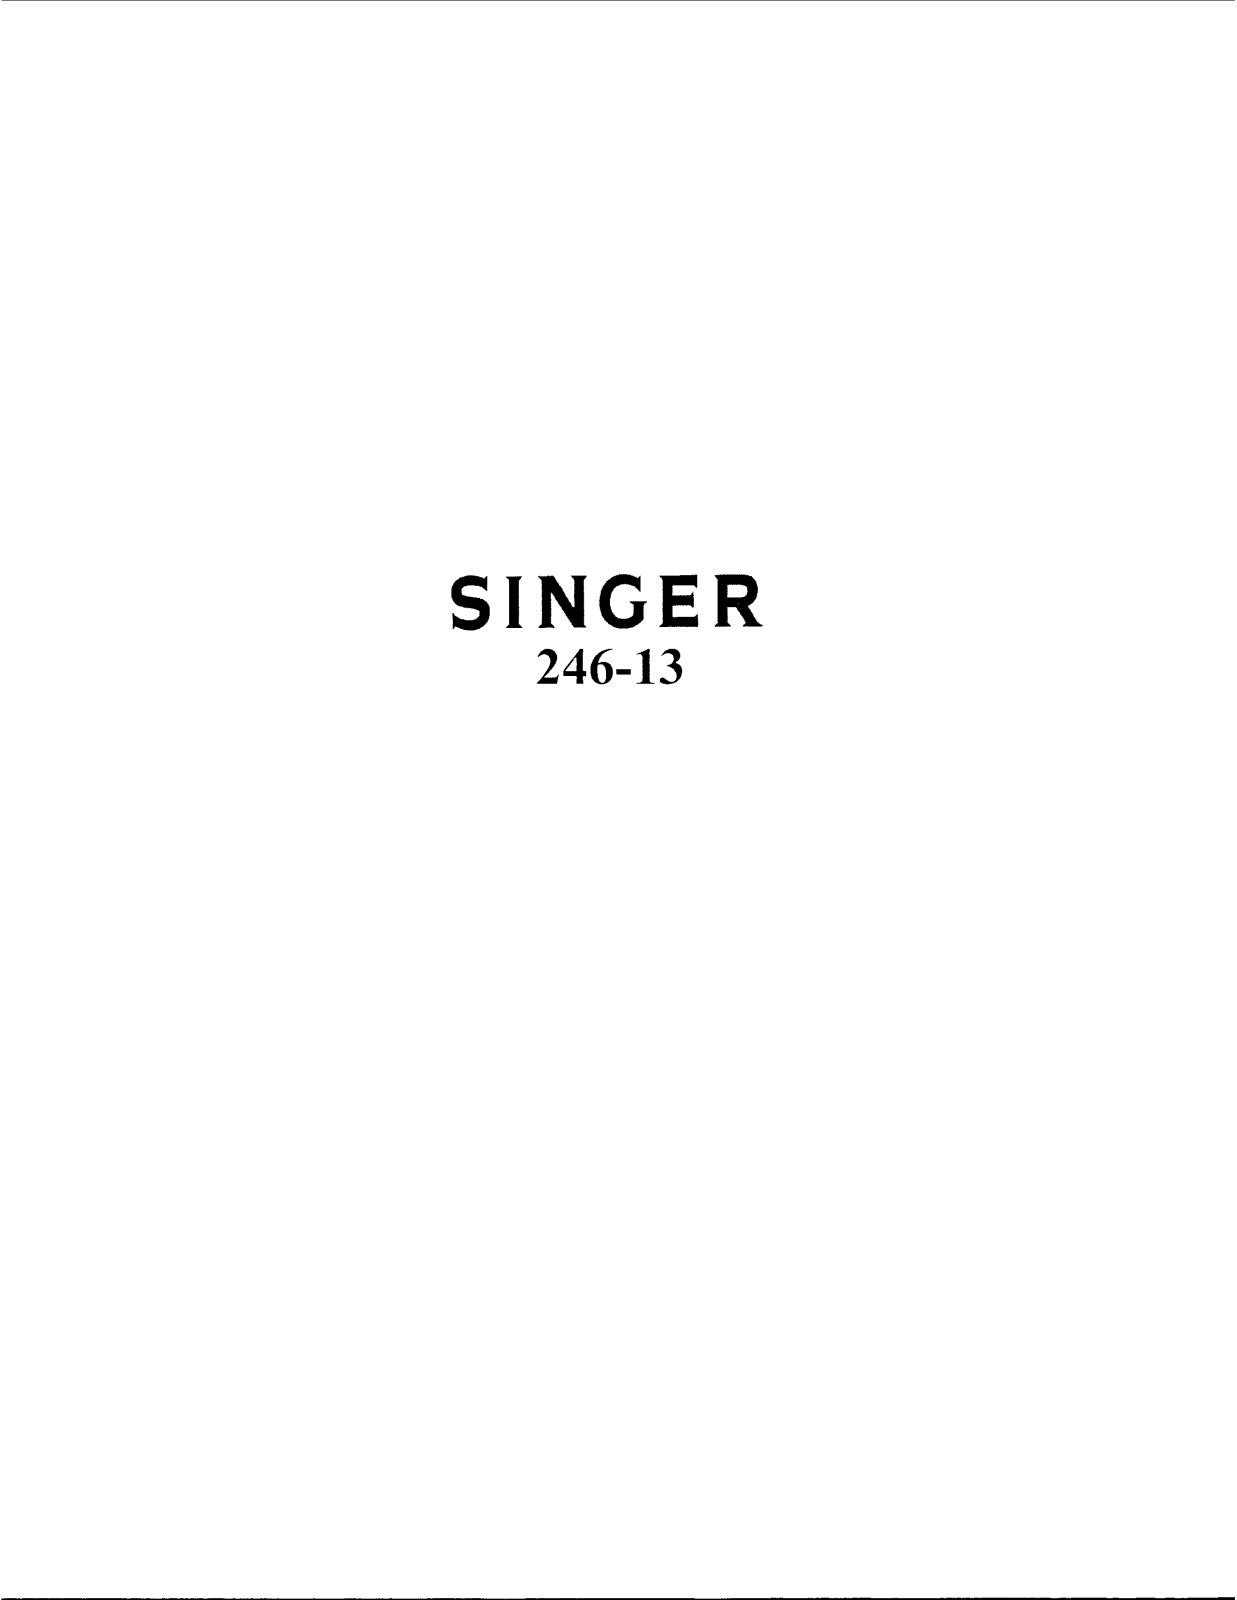 Singer 246-13 User Manual